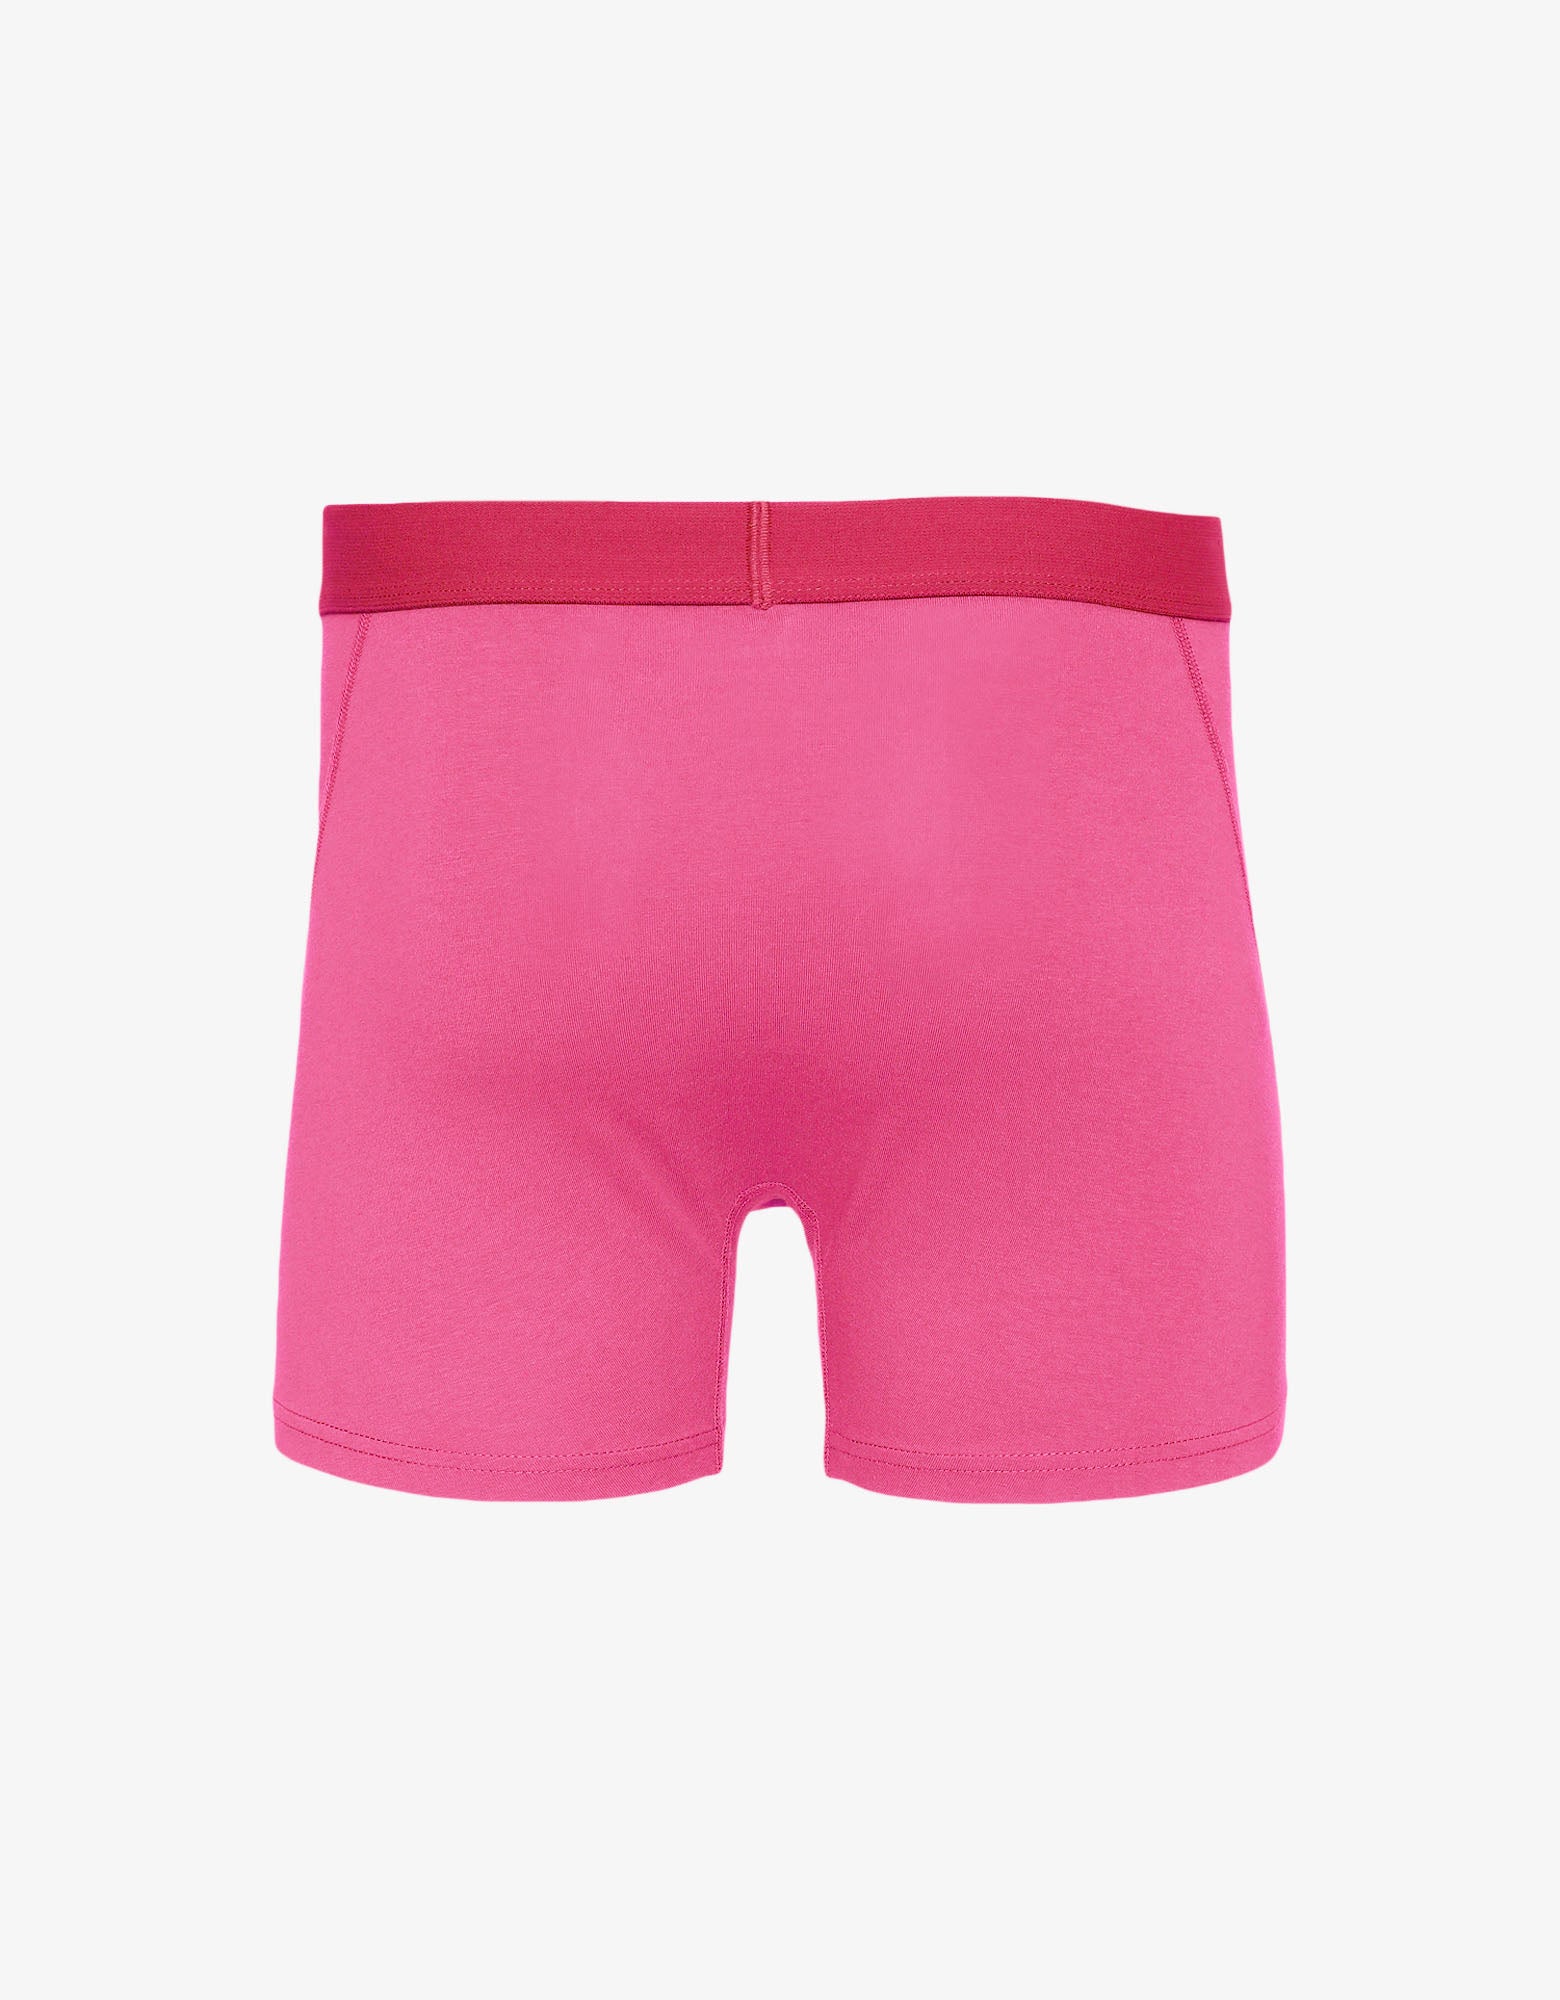 Colorful Standard Classic Organic Boxer Briefs Underwear Bubblegum Pink